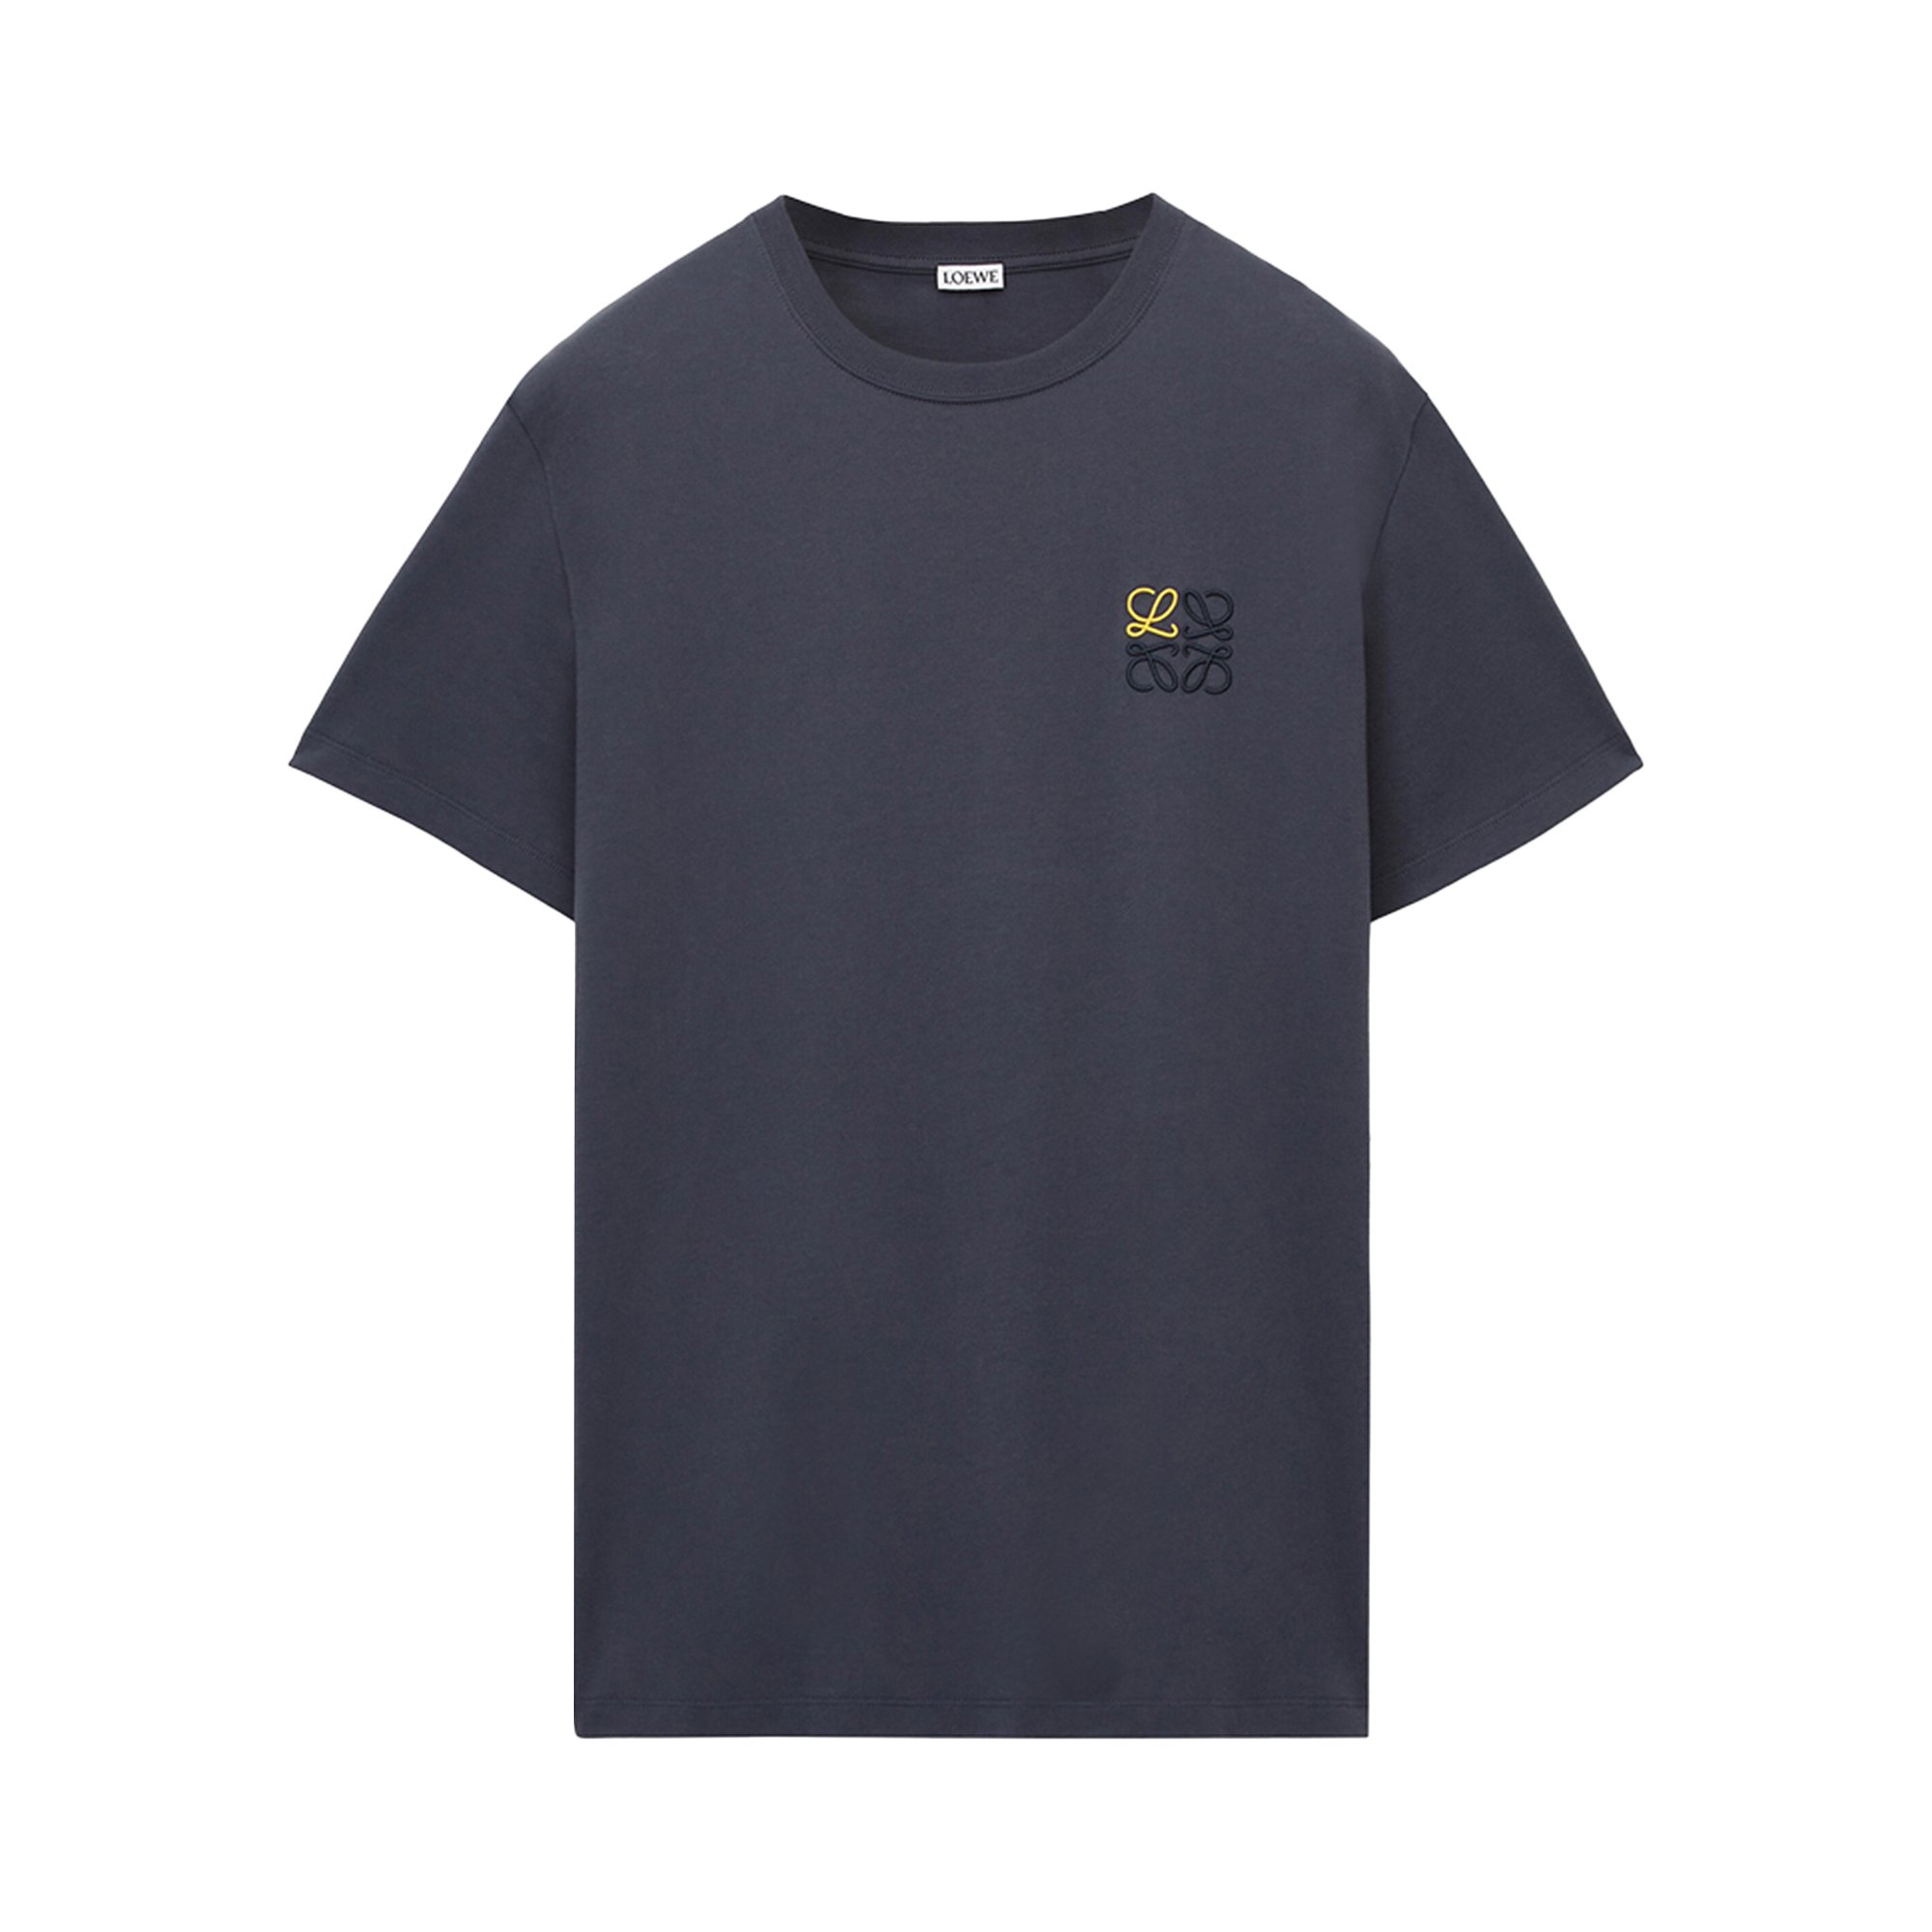 Buy Loewe Anagram T-Shirt 'Onyx Blue' - H526Y22X75 1809 | GOAT